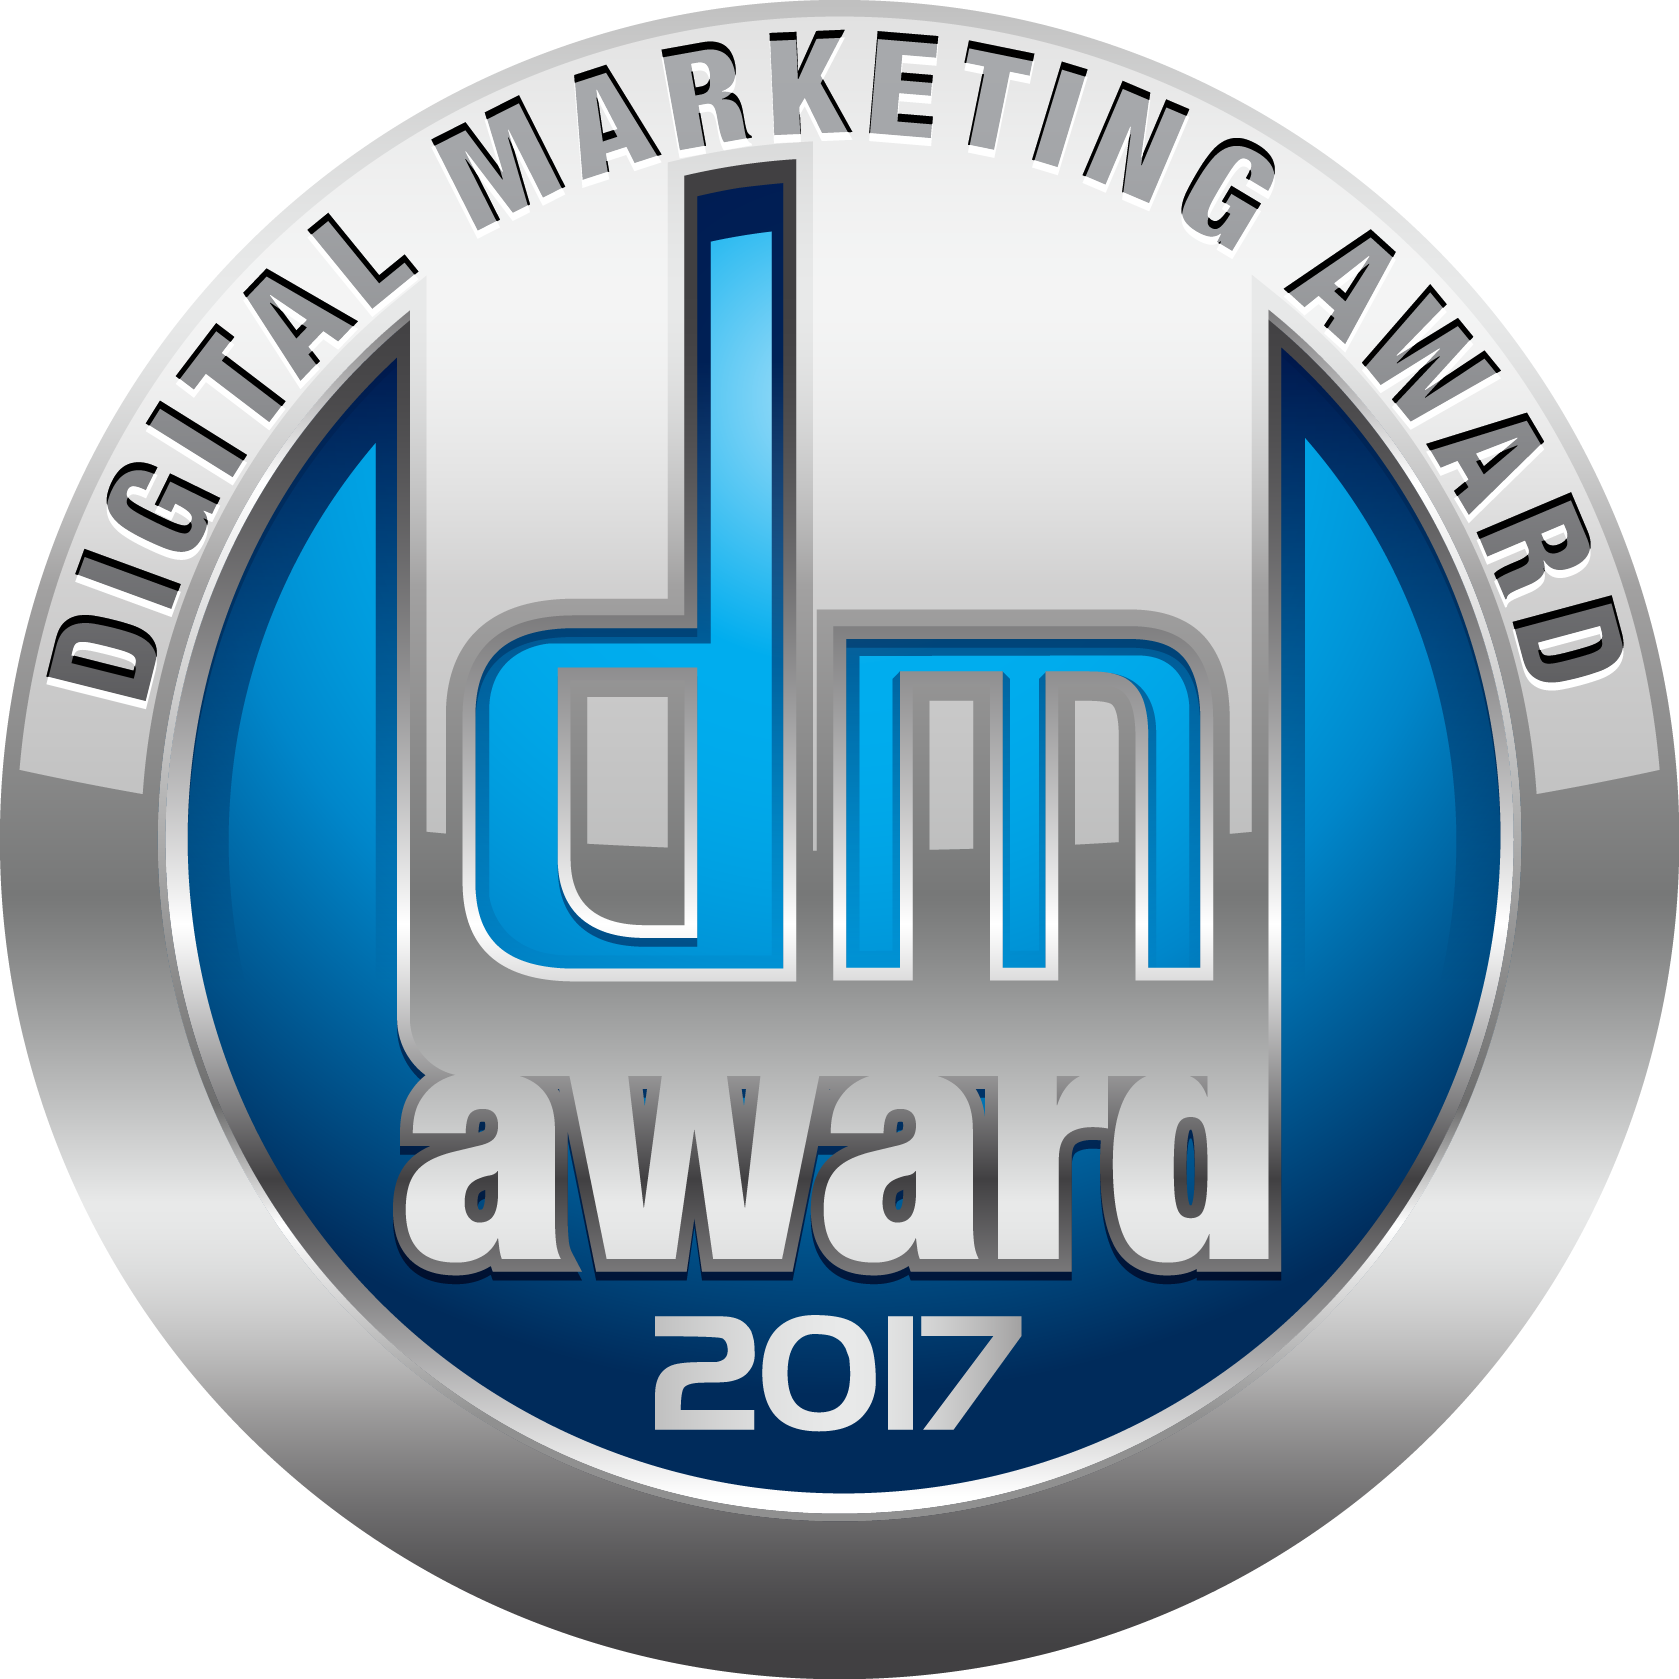 Image reward Digital Marketing Award